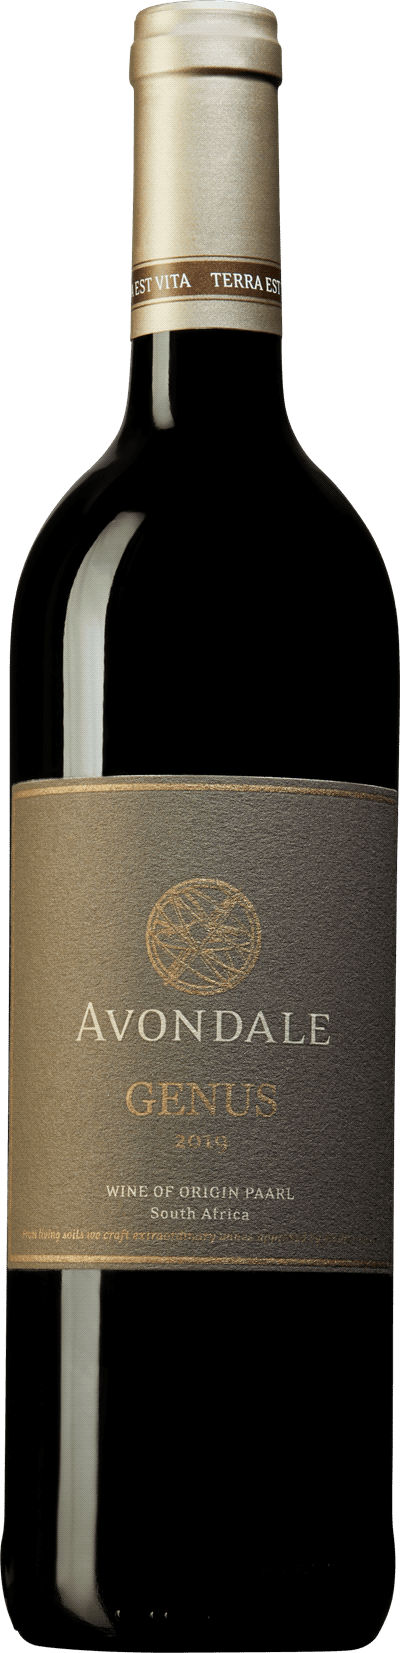 winetable_its_a_bargain_avondale_genus